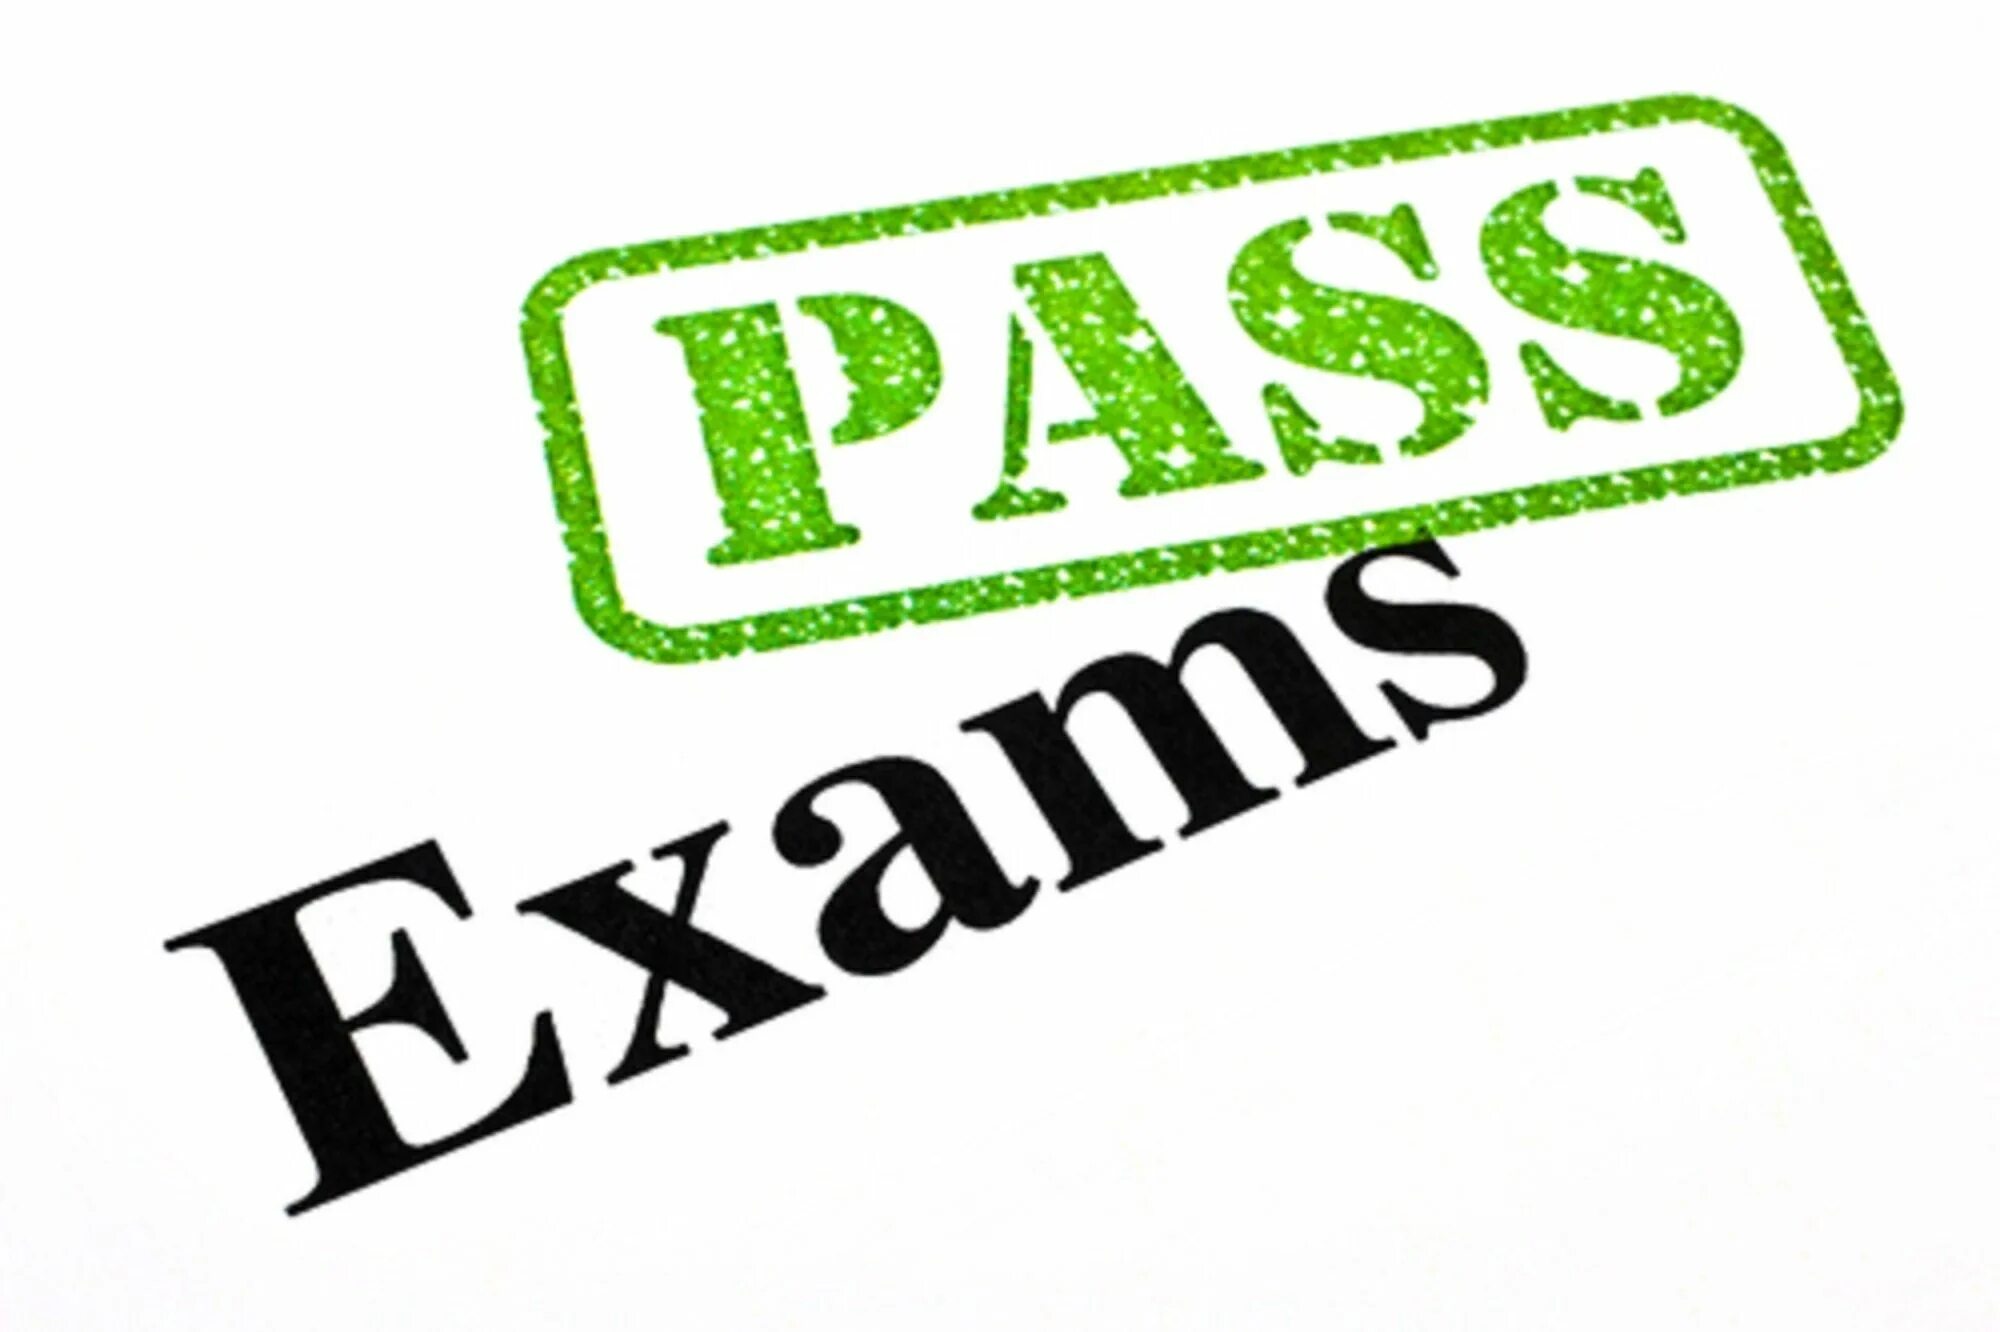 Pass exams successfully. Pass Exam. Passing Exams. The Exam is Passed. Pass.